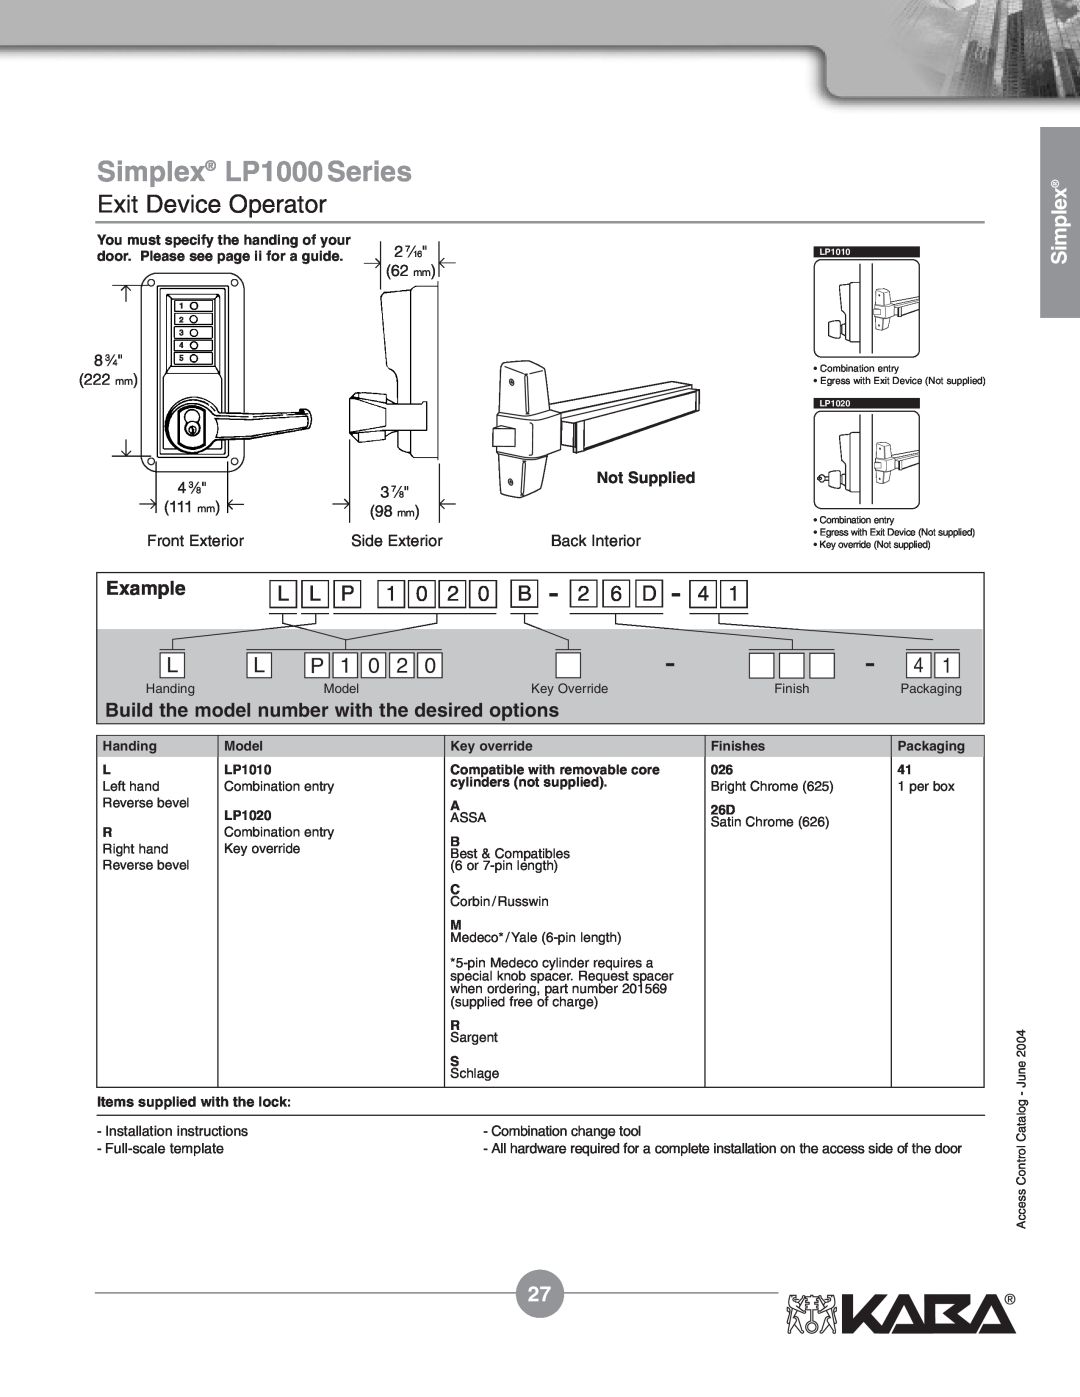 Assa Mechanical Pushbutton Locks manual L L P 1 0 2 0 B - 2, D - 4, Simplex LP1000 Series, Exit Device Operator, Example 